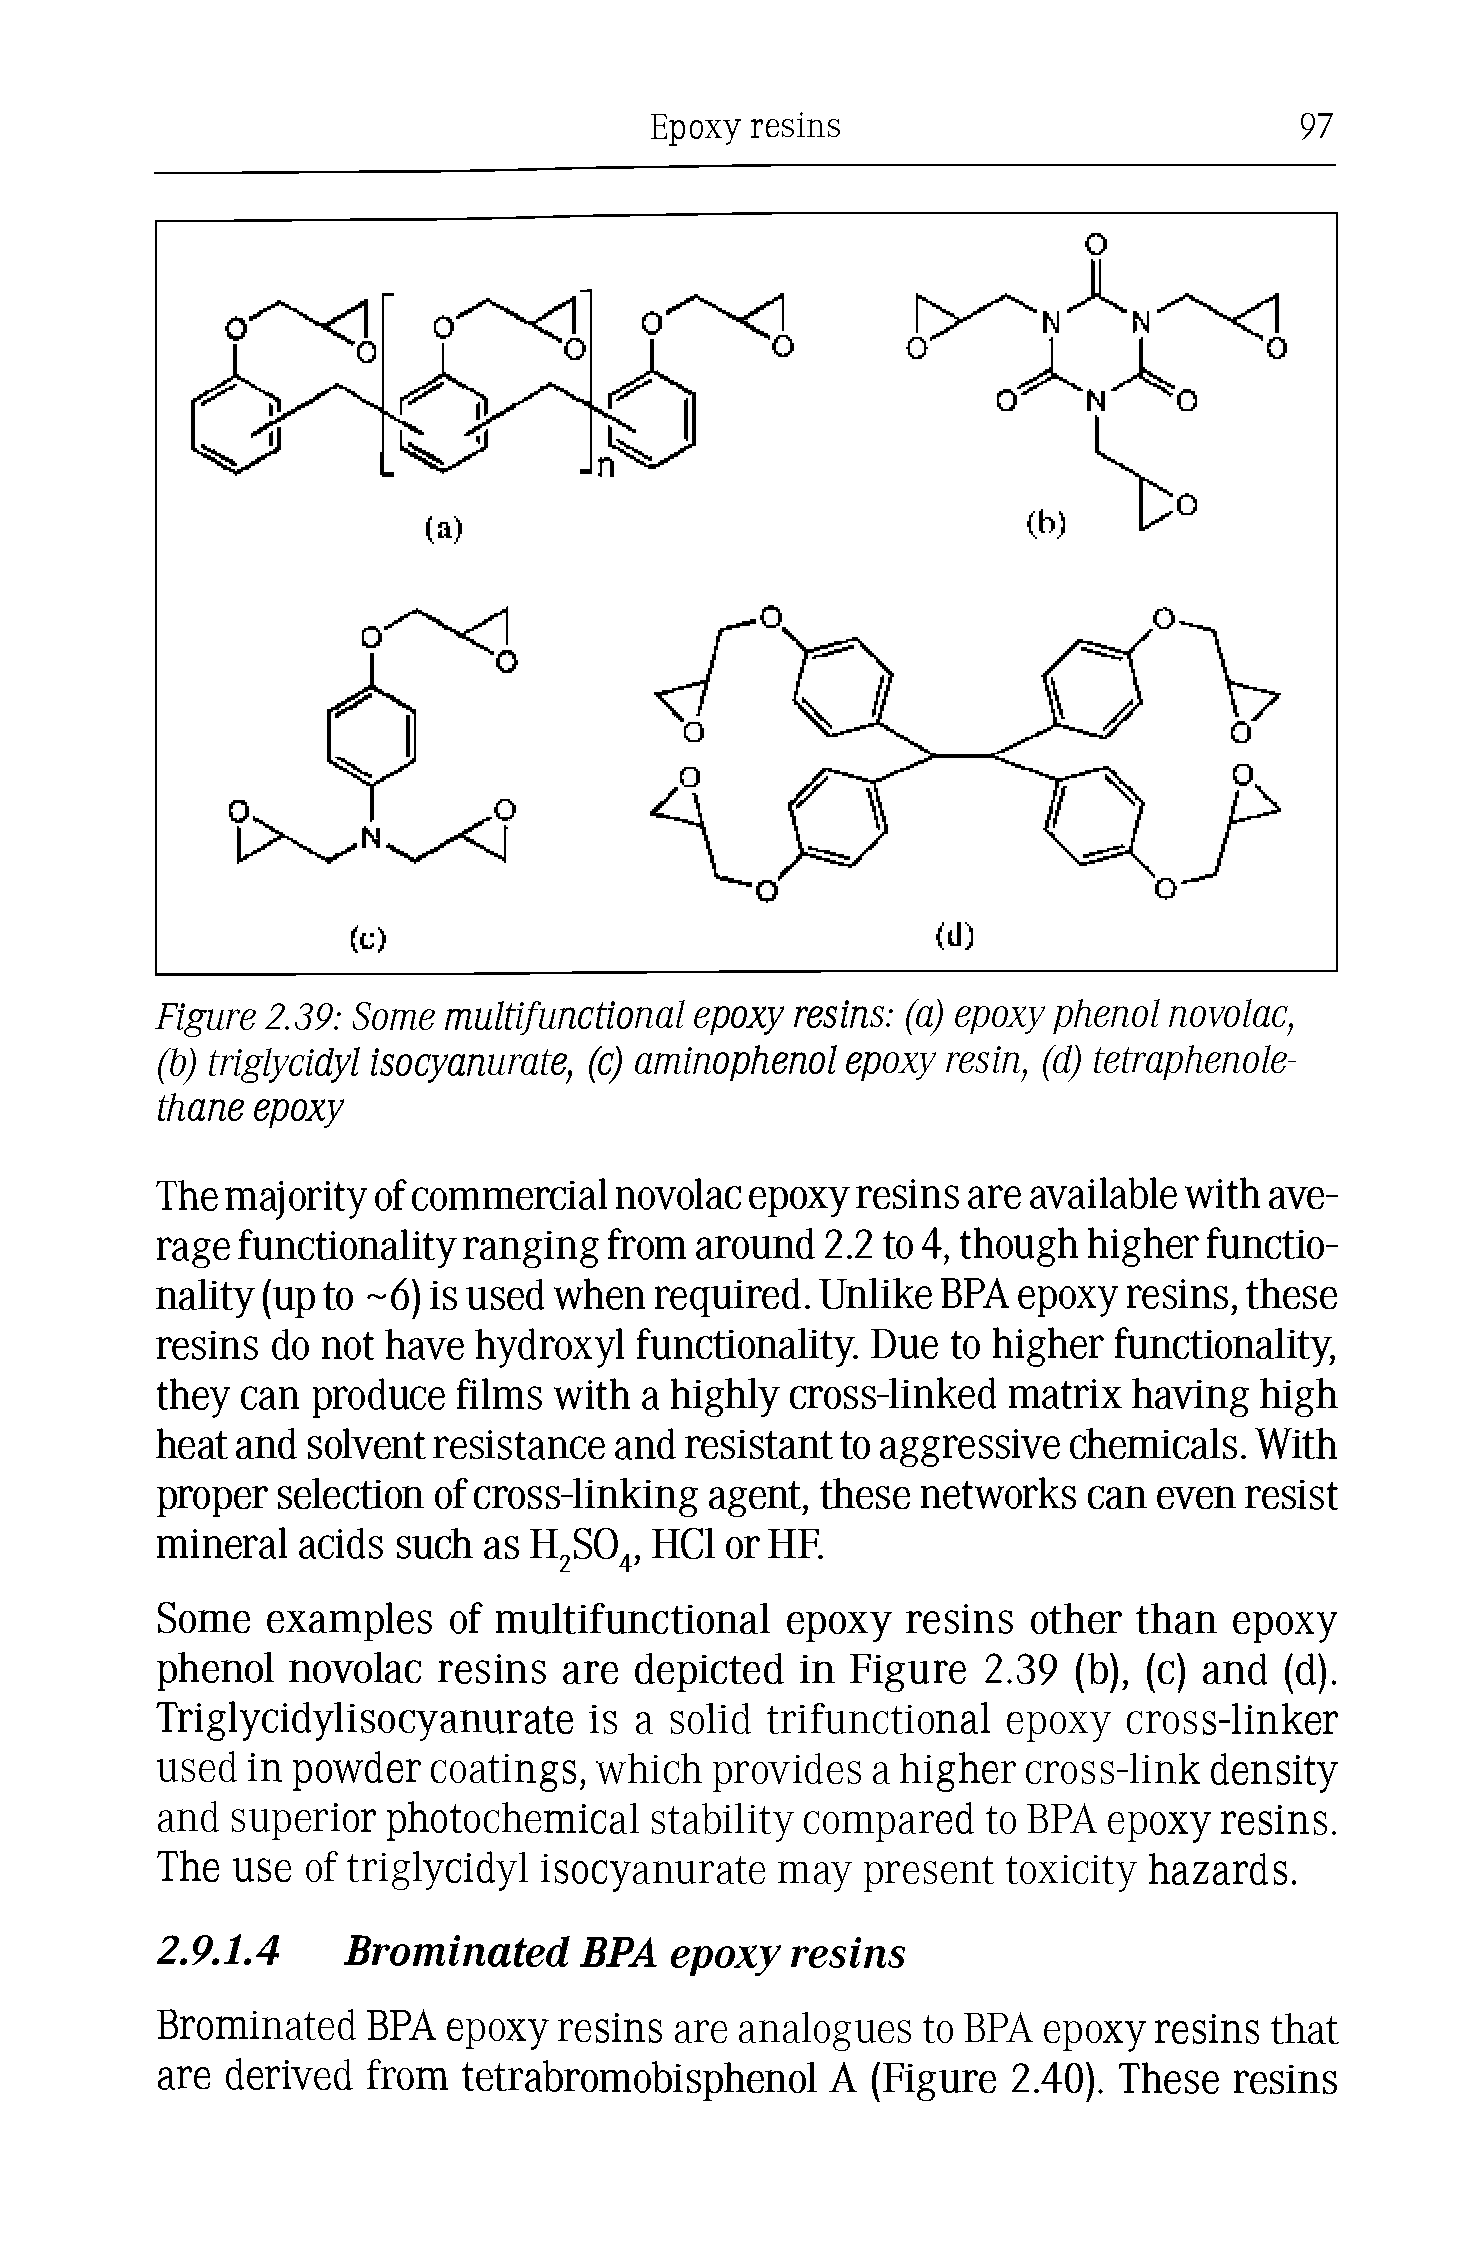 Figure 2.39 Some multifunctional epoxy resins (a) epoxy phenol novolac,...